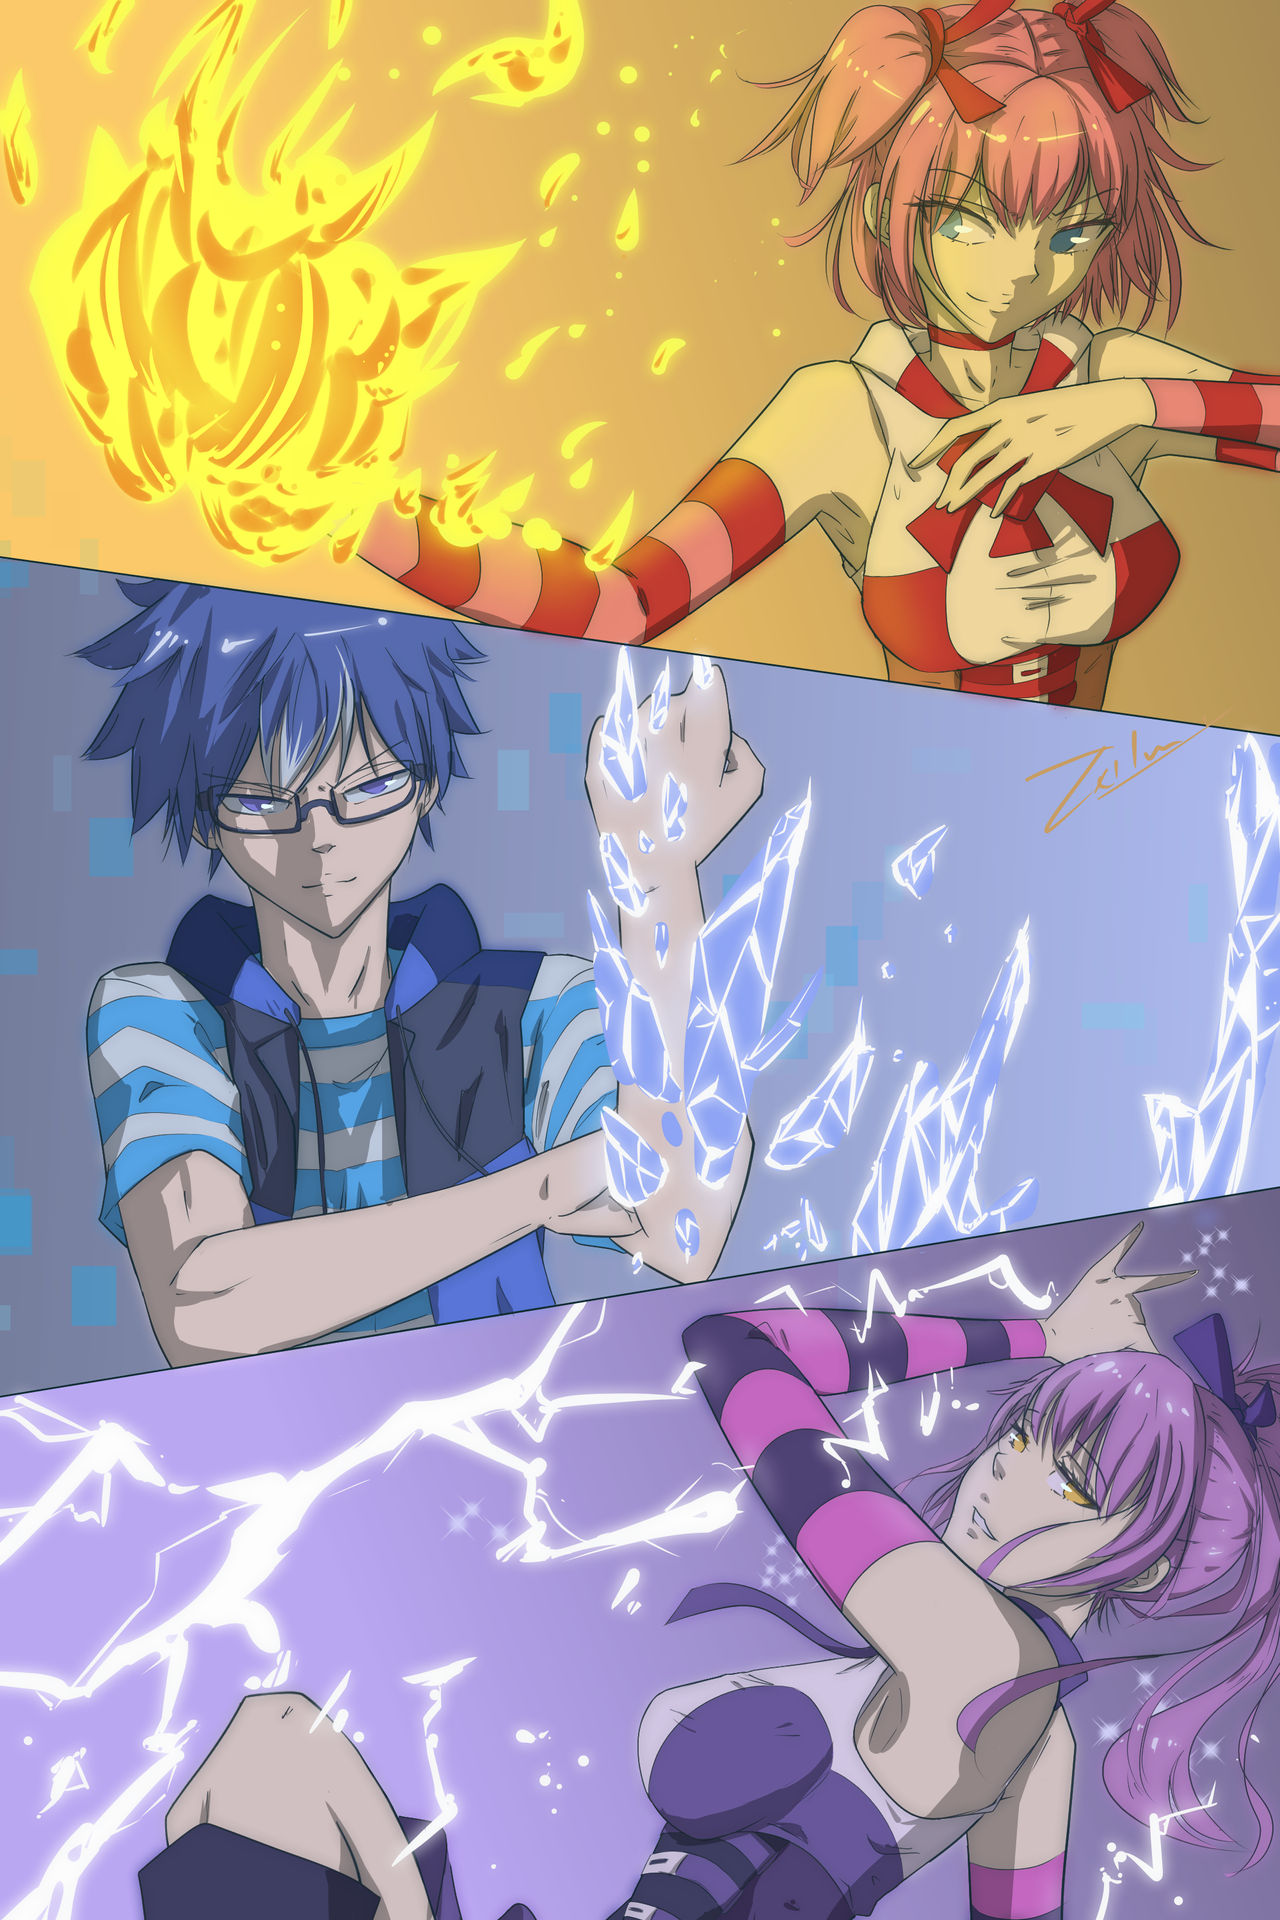 Super Power Anime chara by ZlrDraxnez on DeviantArt